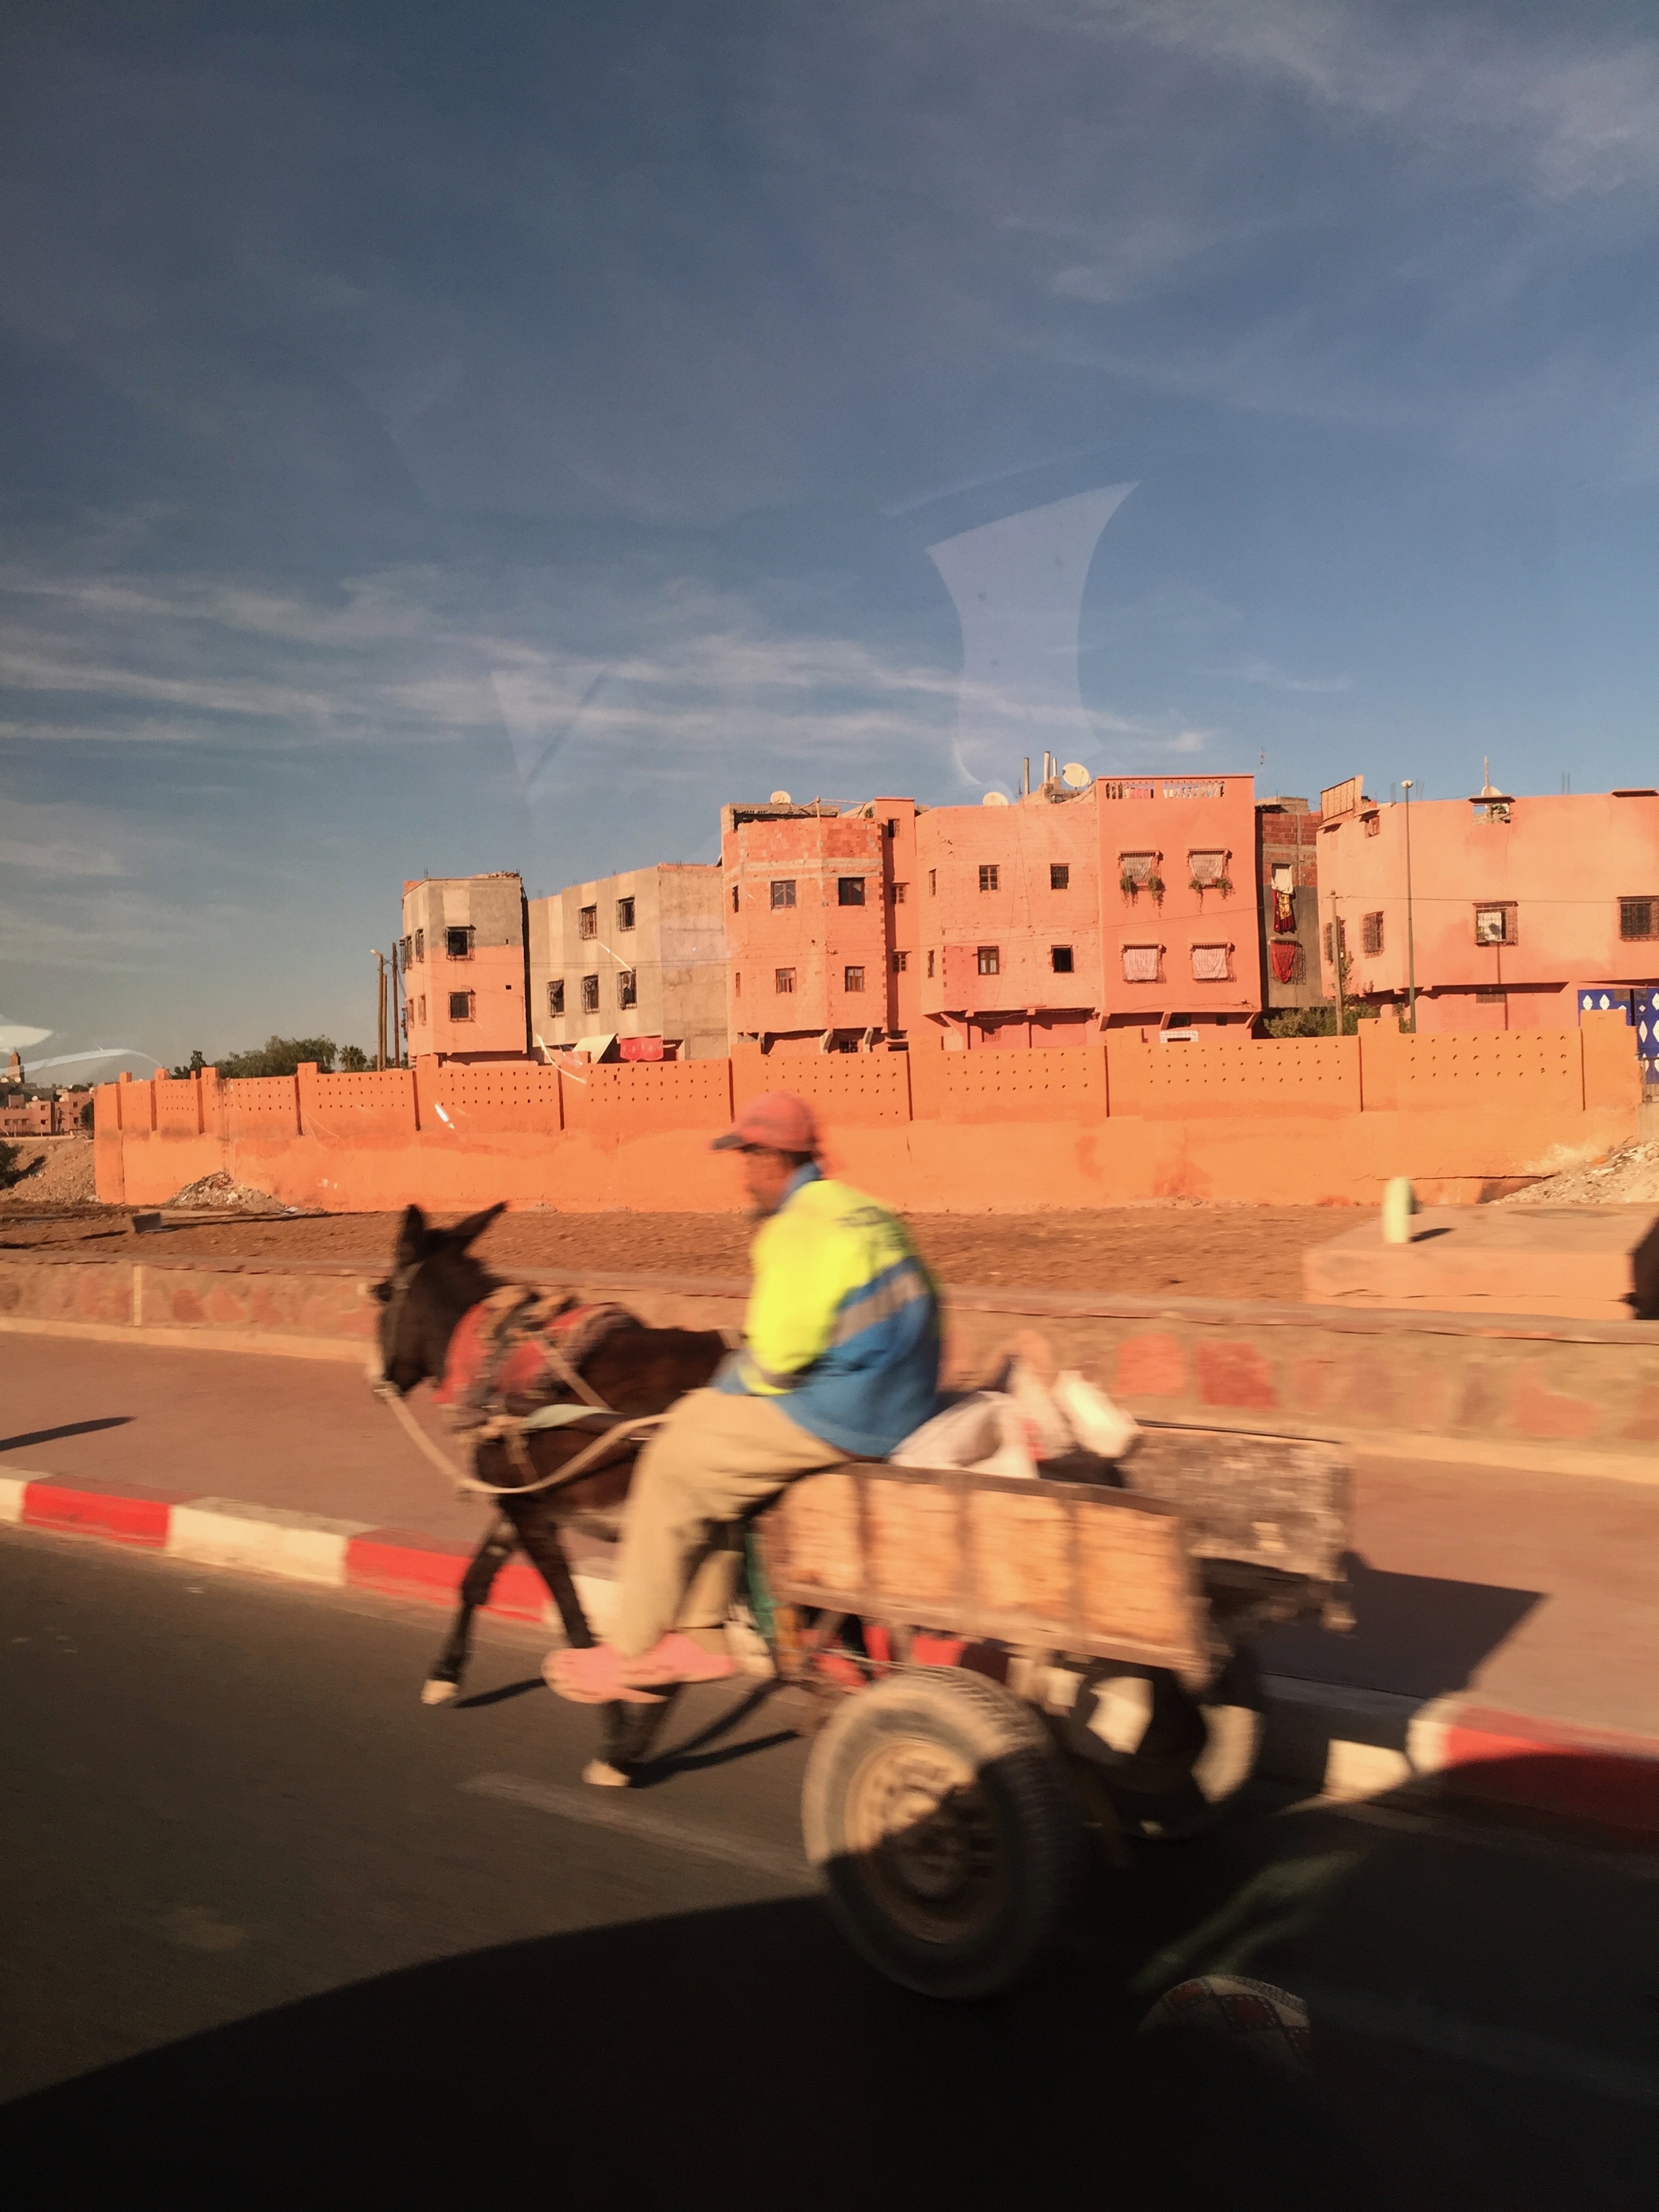 Dodging the traffic in Marrakech